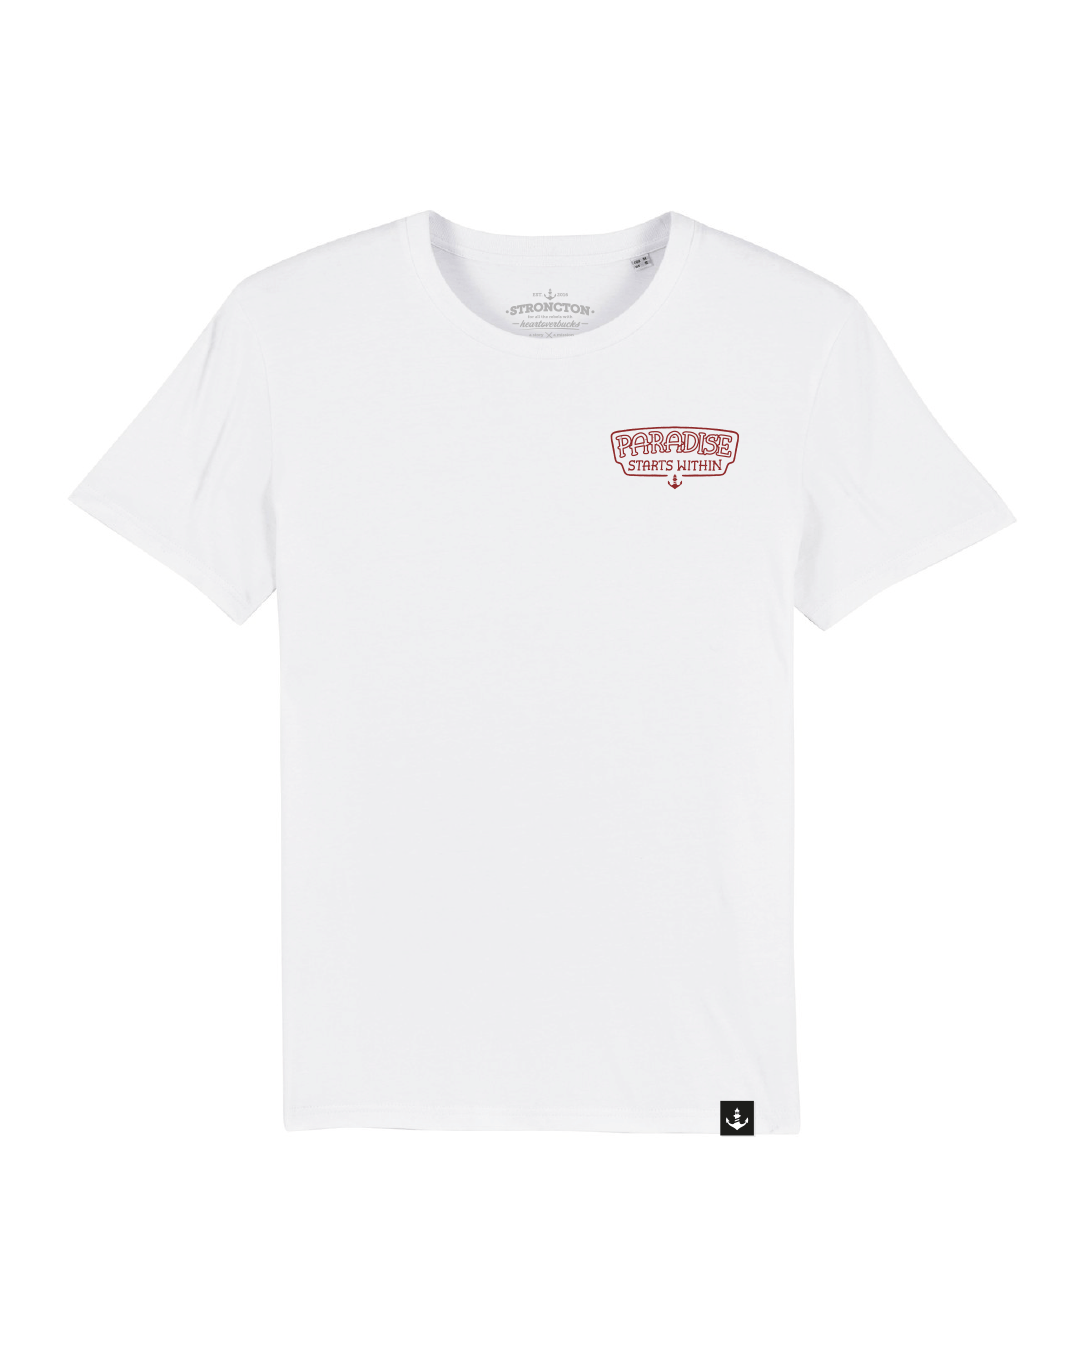 Paradise T-Shirt - White/Rust